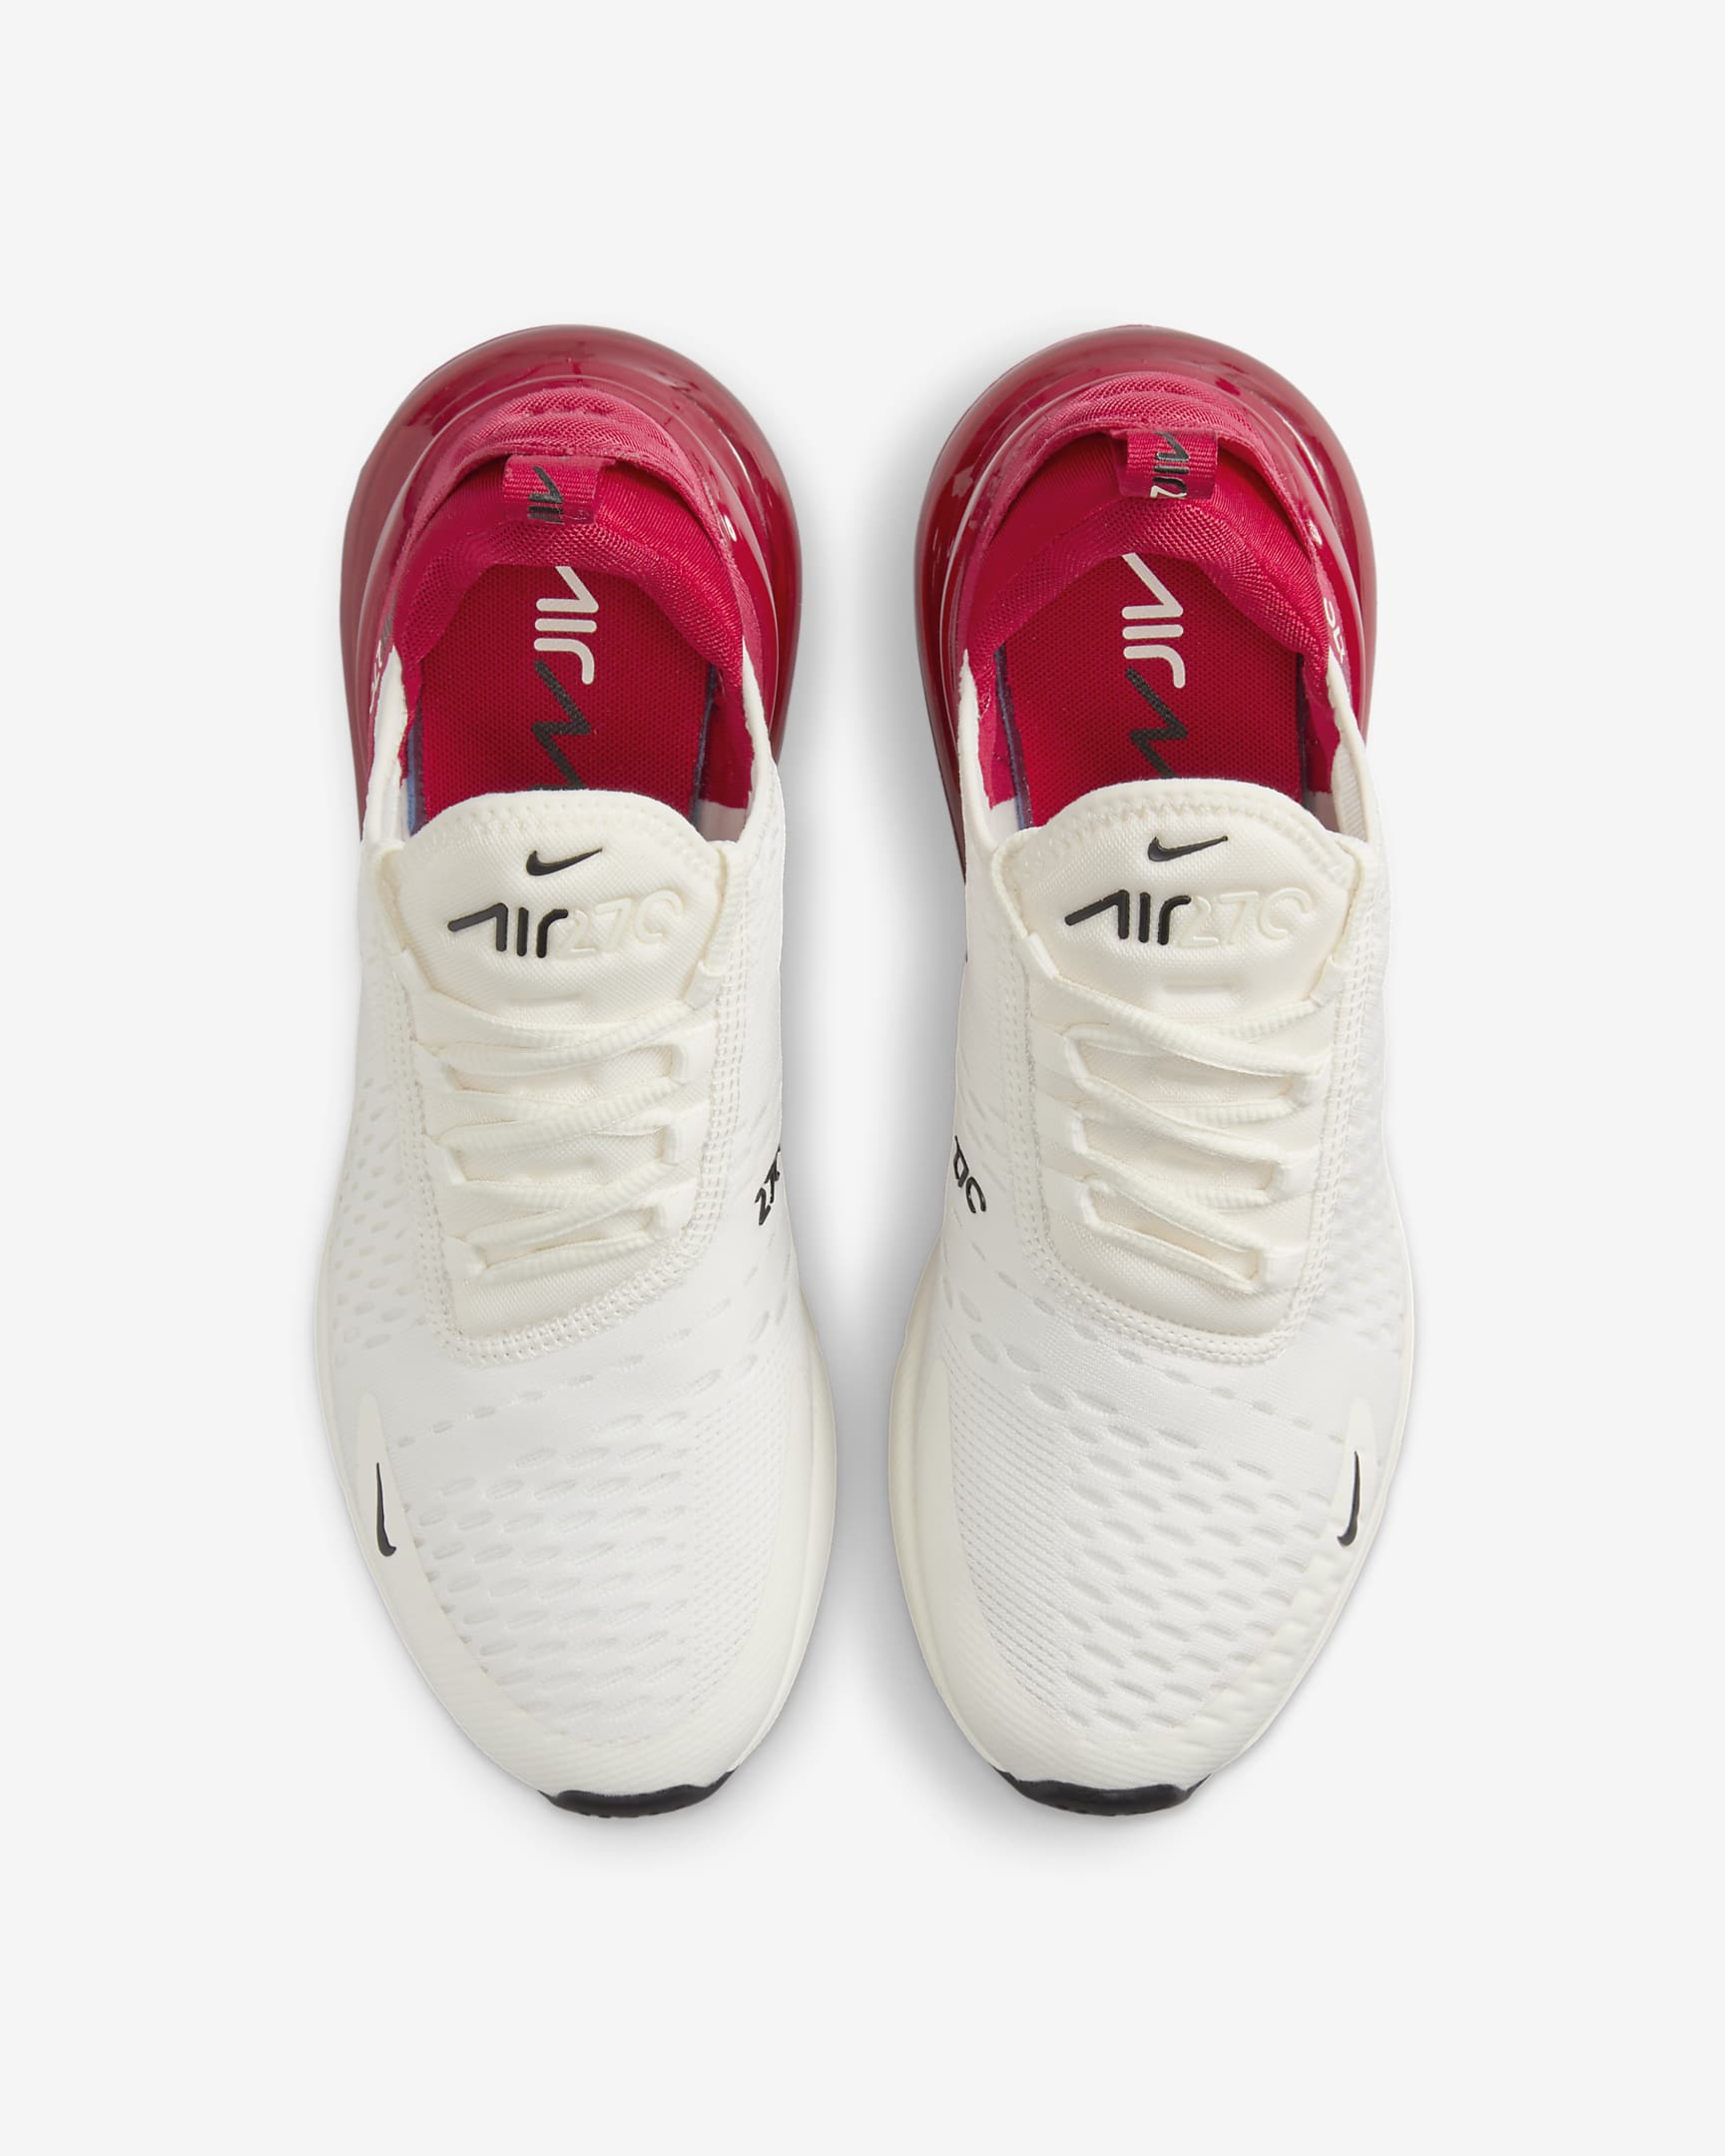 Nike Air Max 270 Women's Shoes - Gym Red/Black/Sail